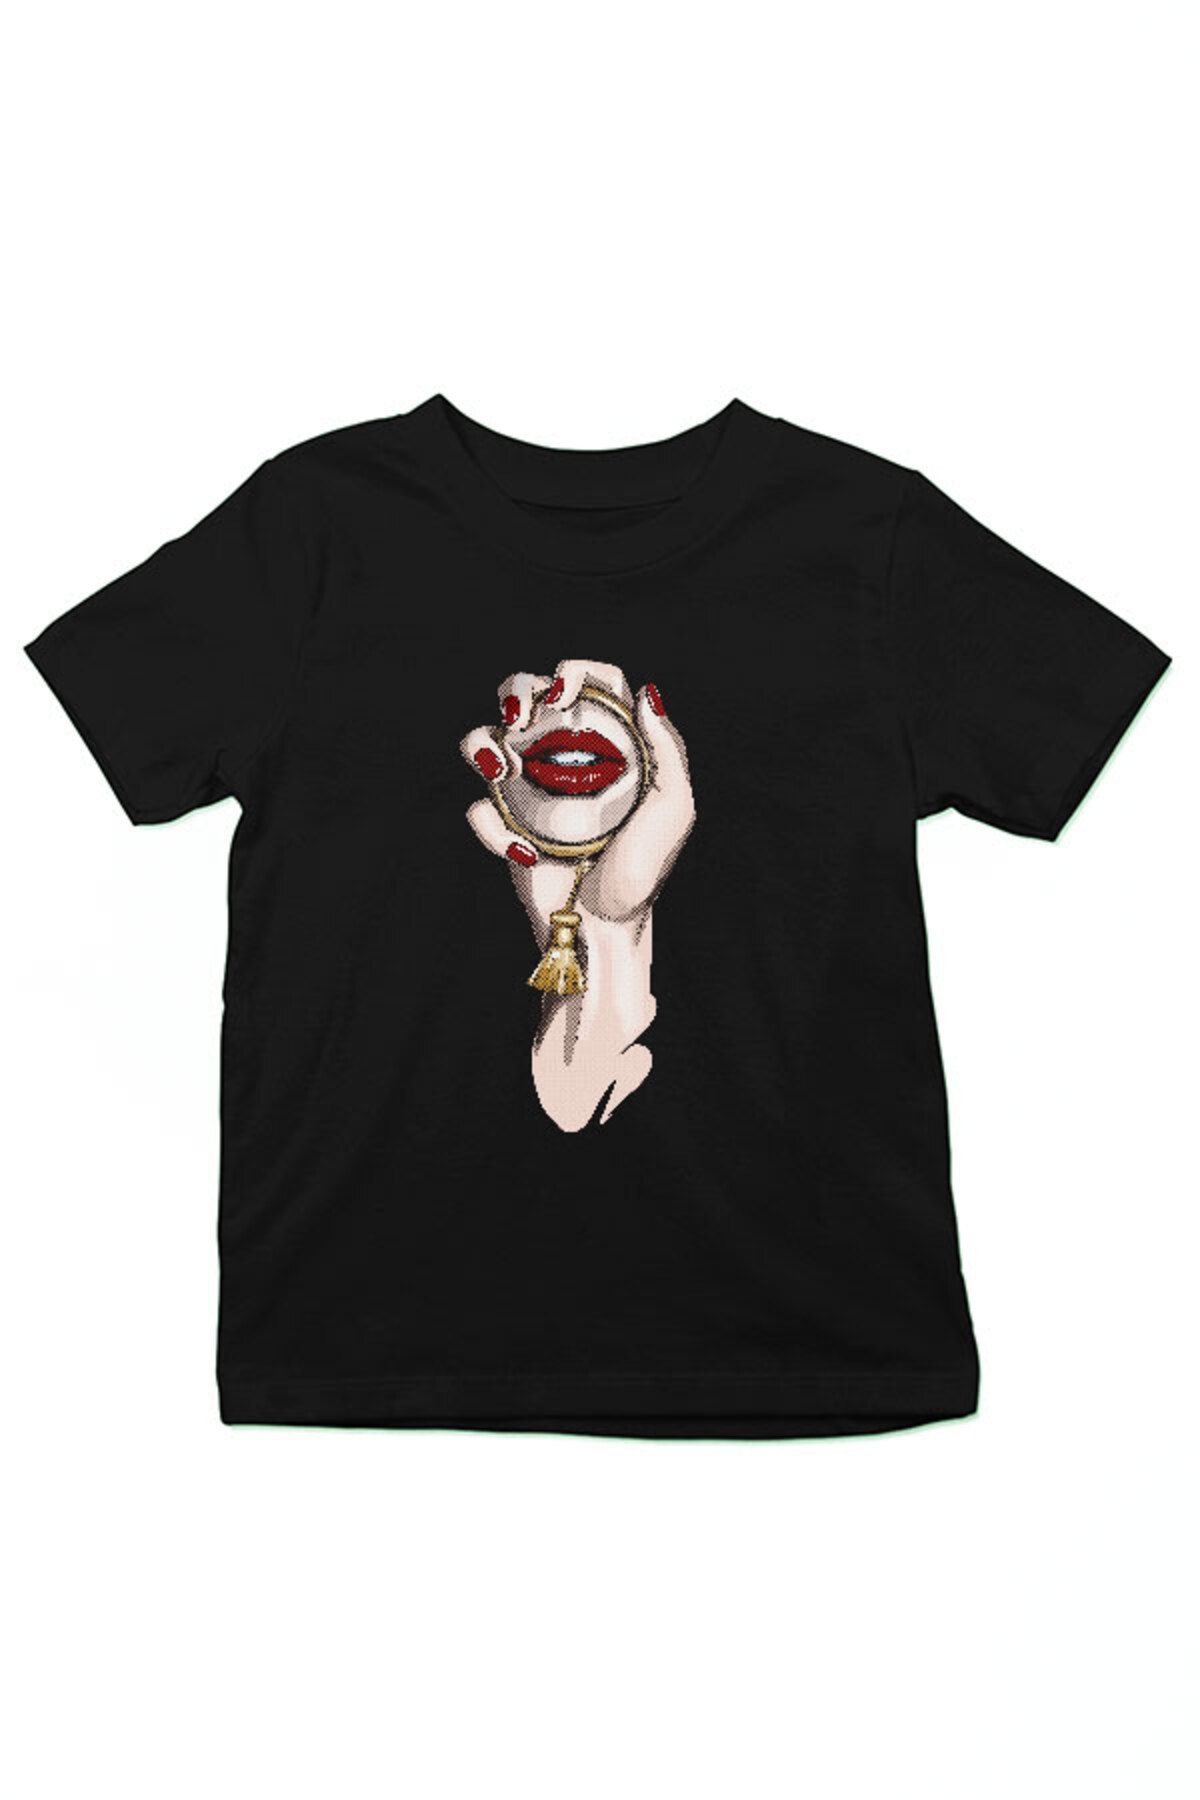 Darkhane El Aynası ve Makyaj Fashion Siyah Unisex Çocuk Tişört T-Shirt